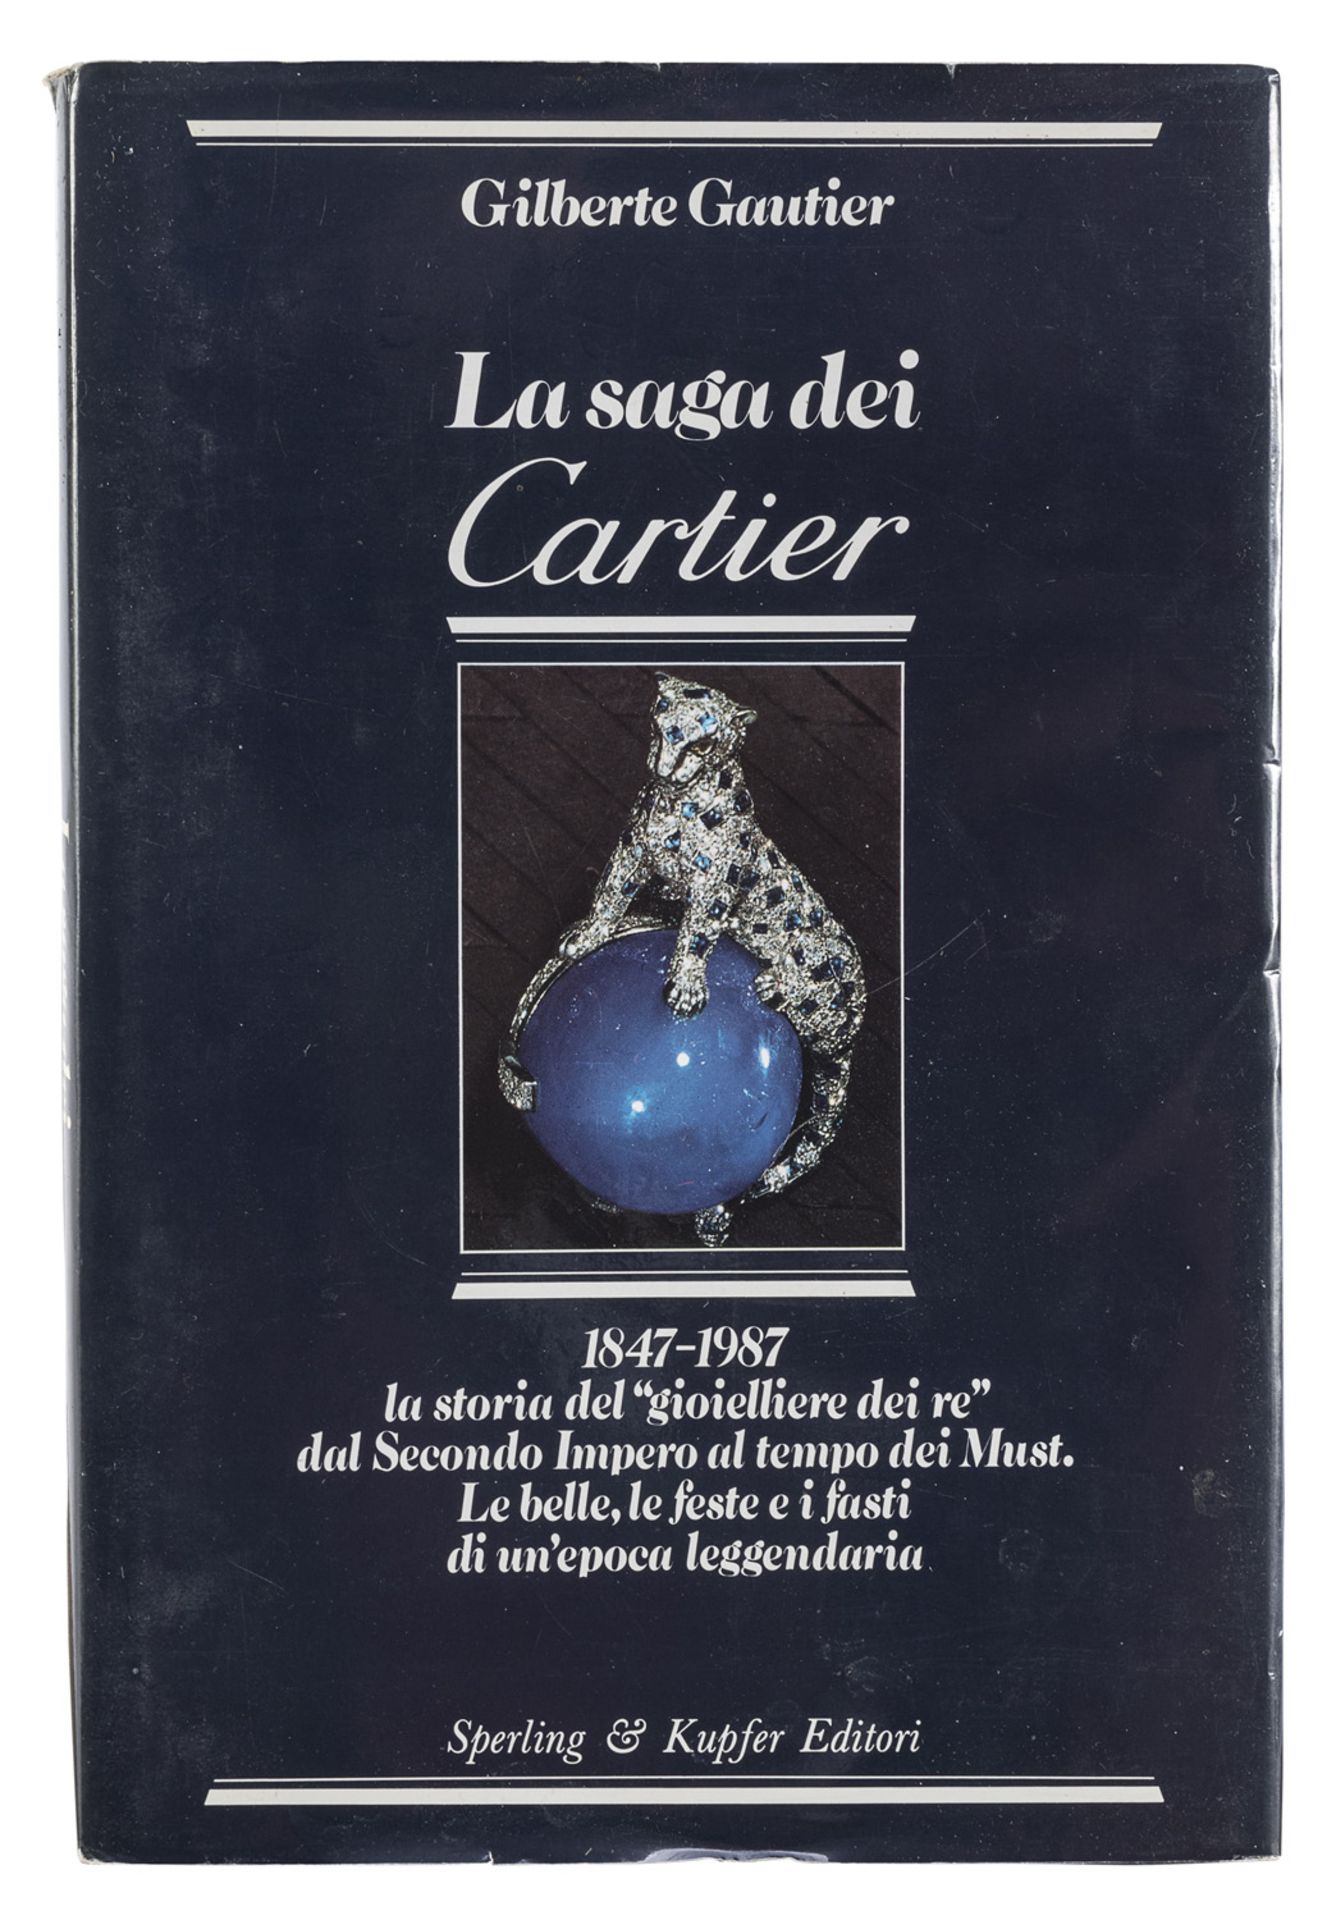 LA SAGA DEI CARTIER' BY GILBERTE GAUTIER